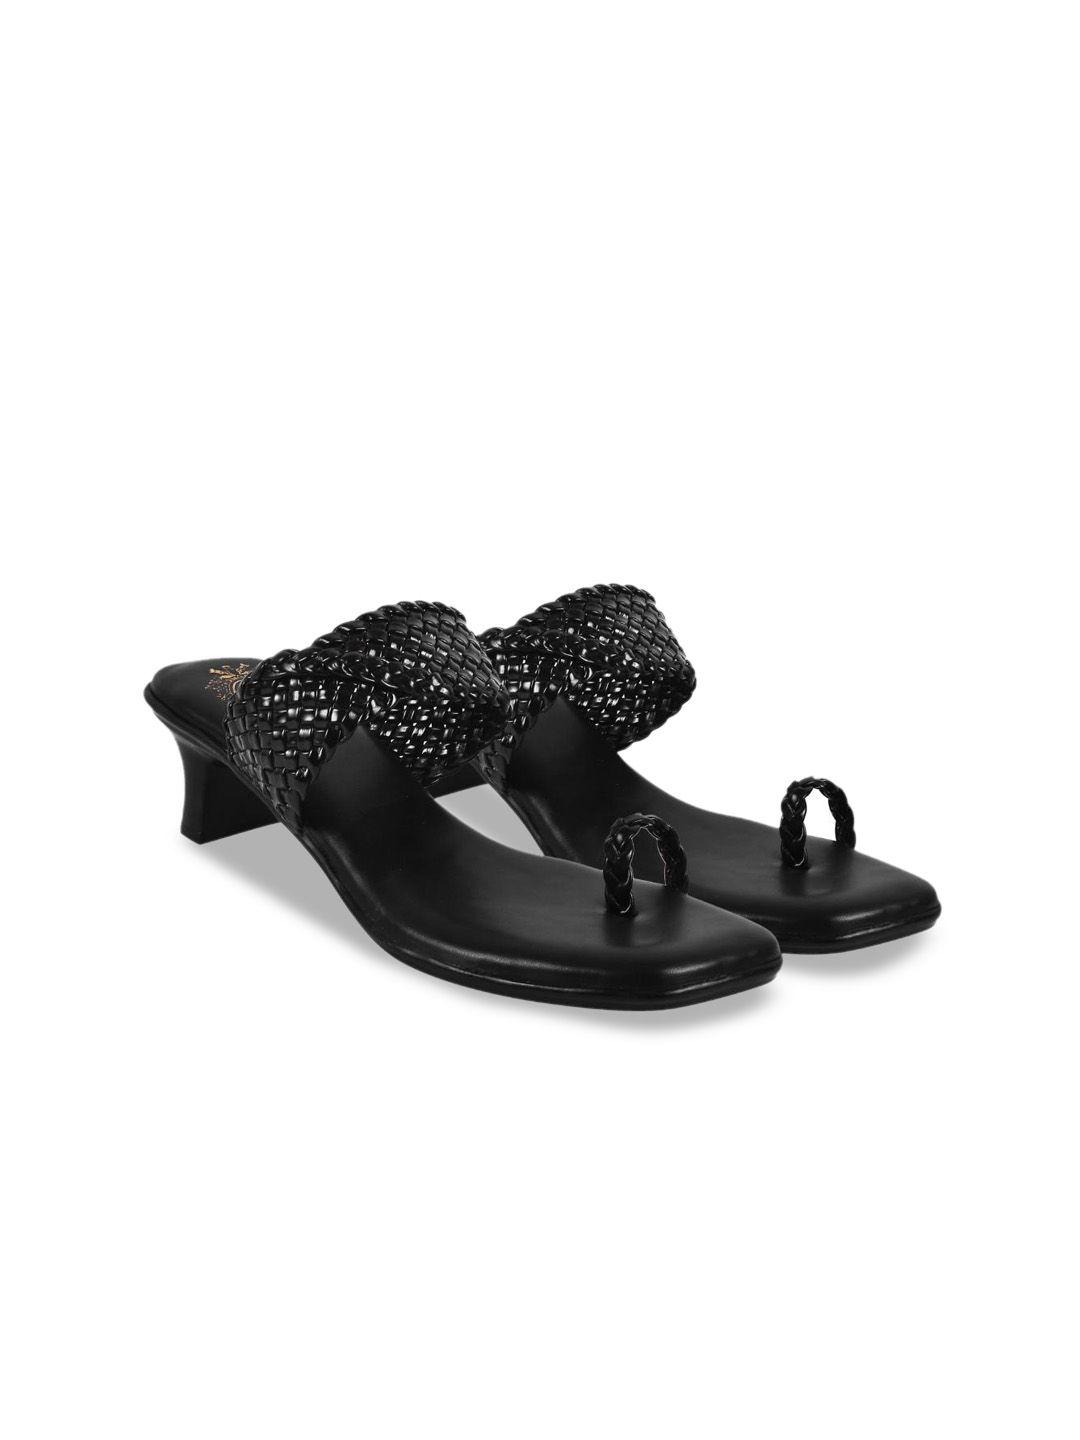 shoetopia-braided-one-toe-block-heels